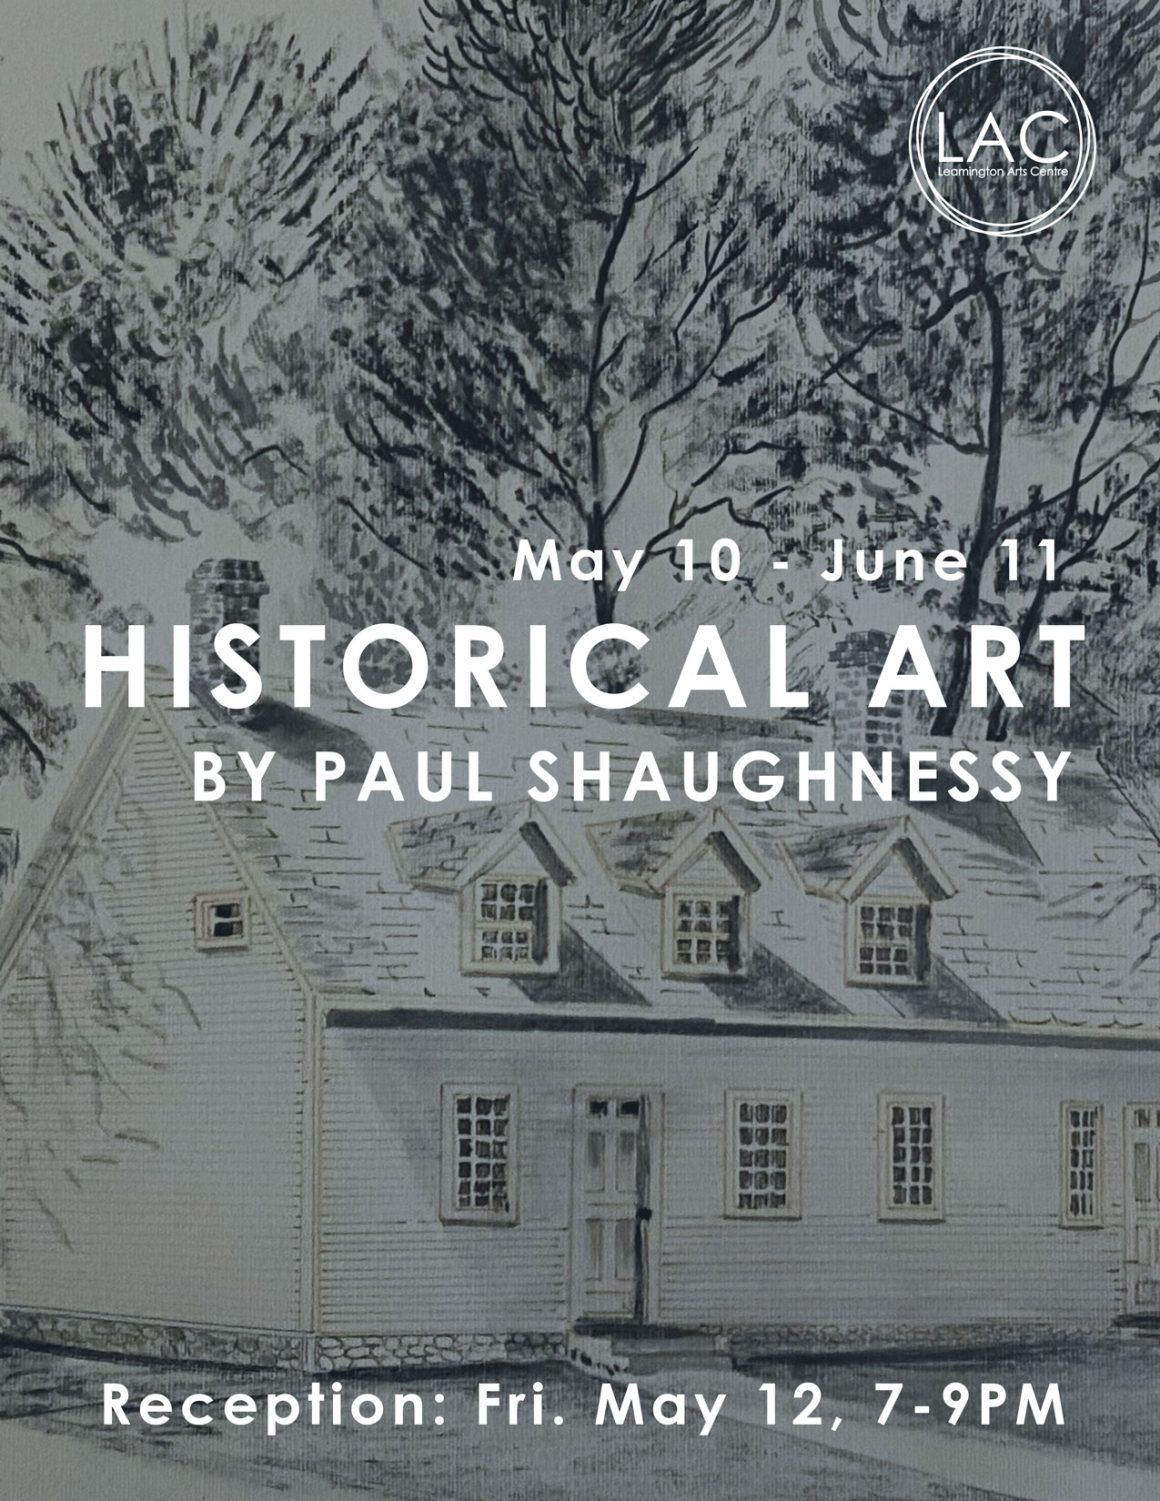 HISTORICAL ART: Paul Shaughnessy